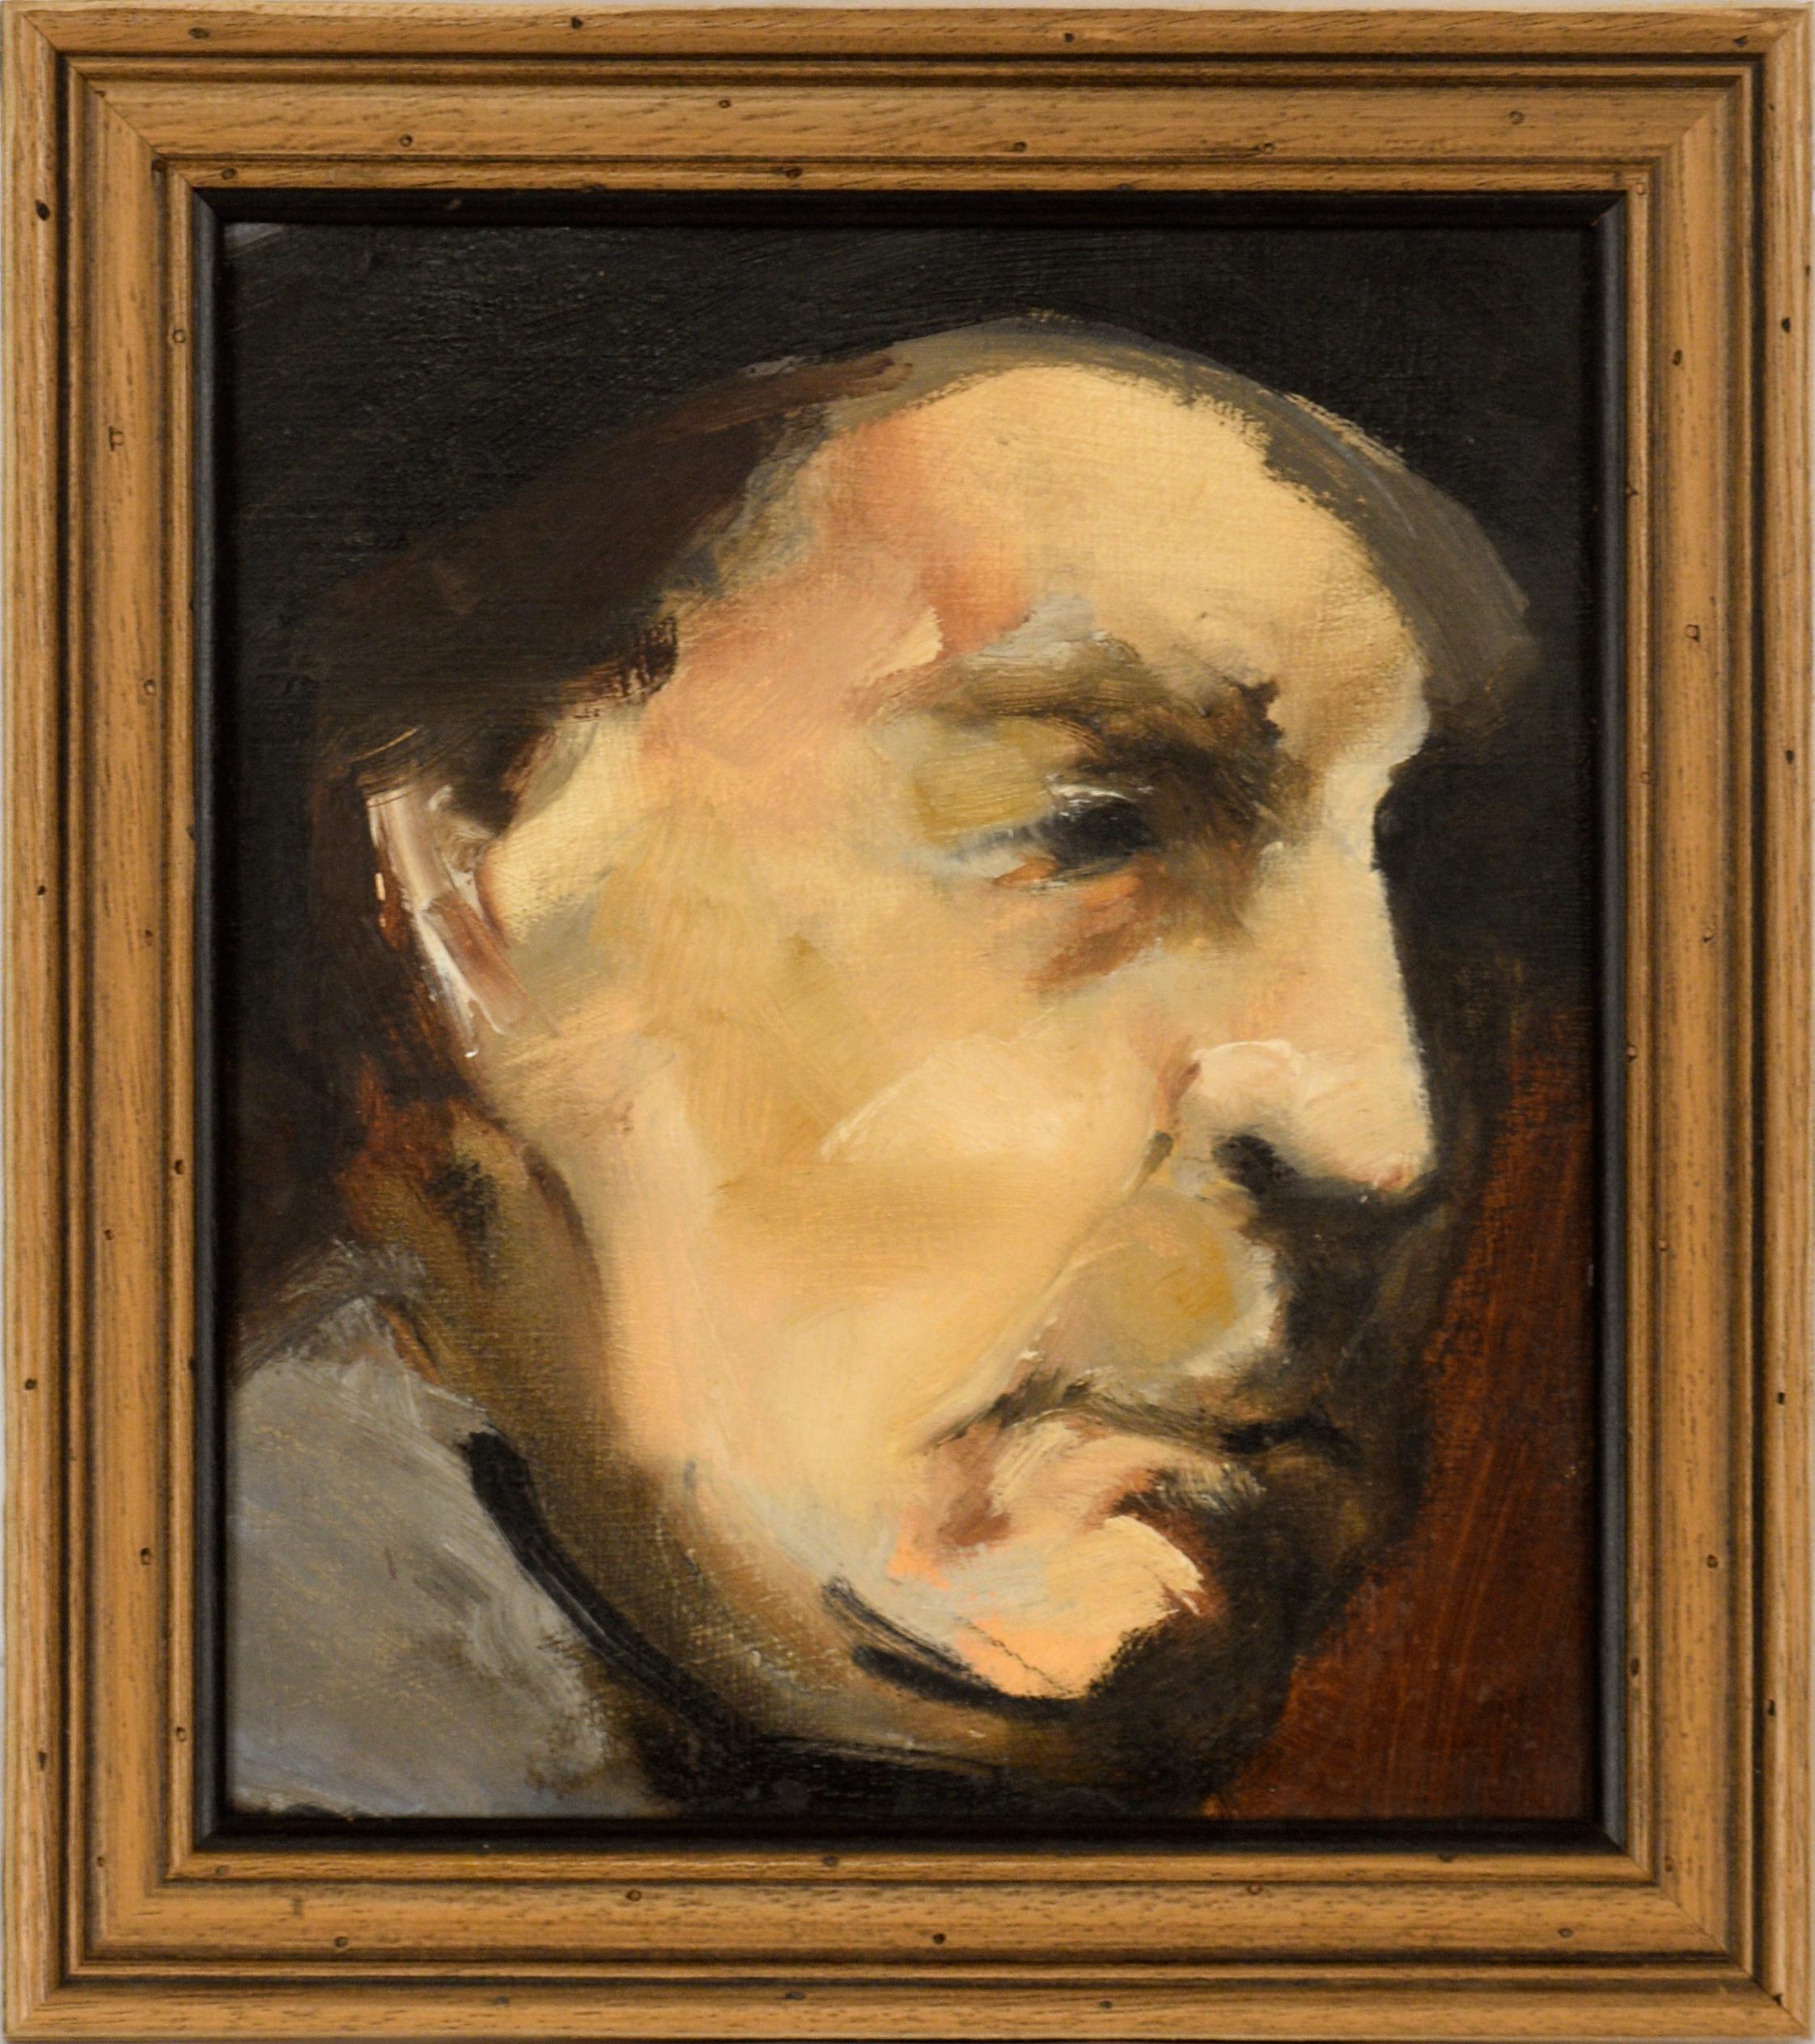 Bay Area Figurative Portrait of a Man in Oil on Masonite Francis Bacon